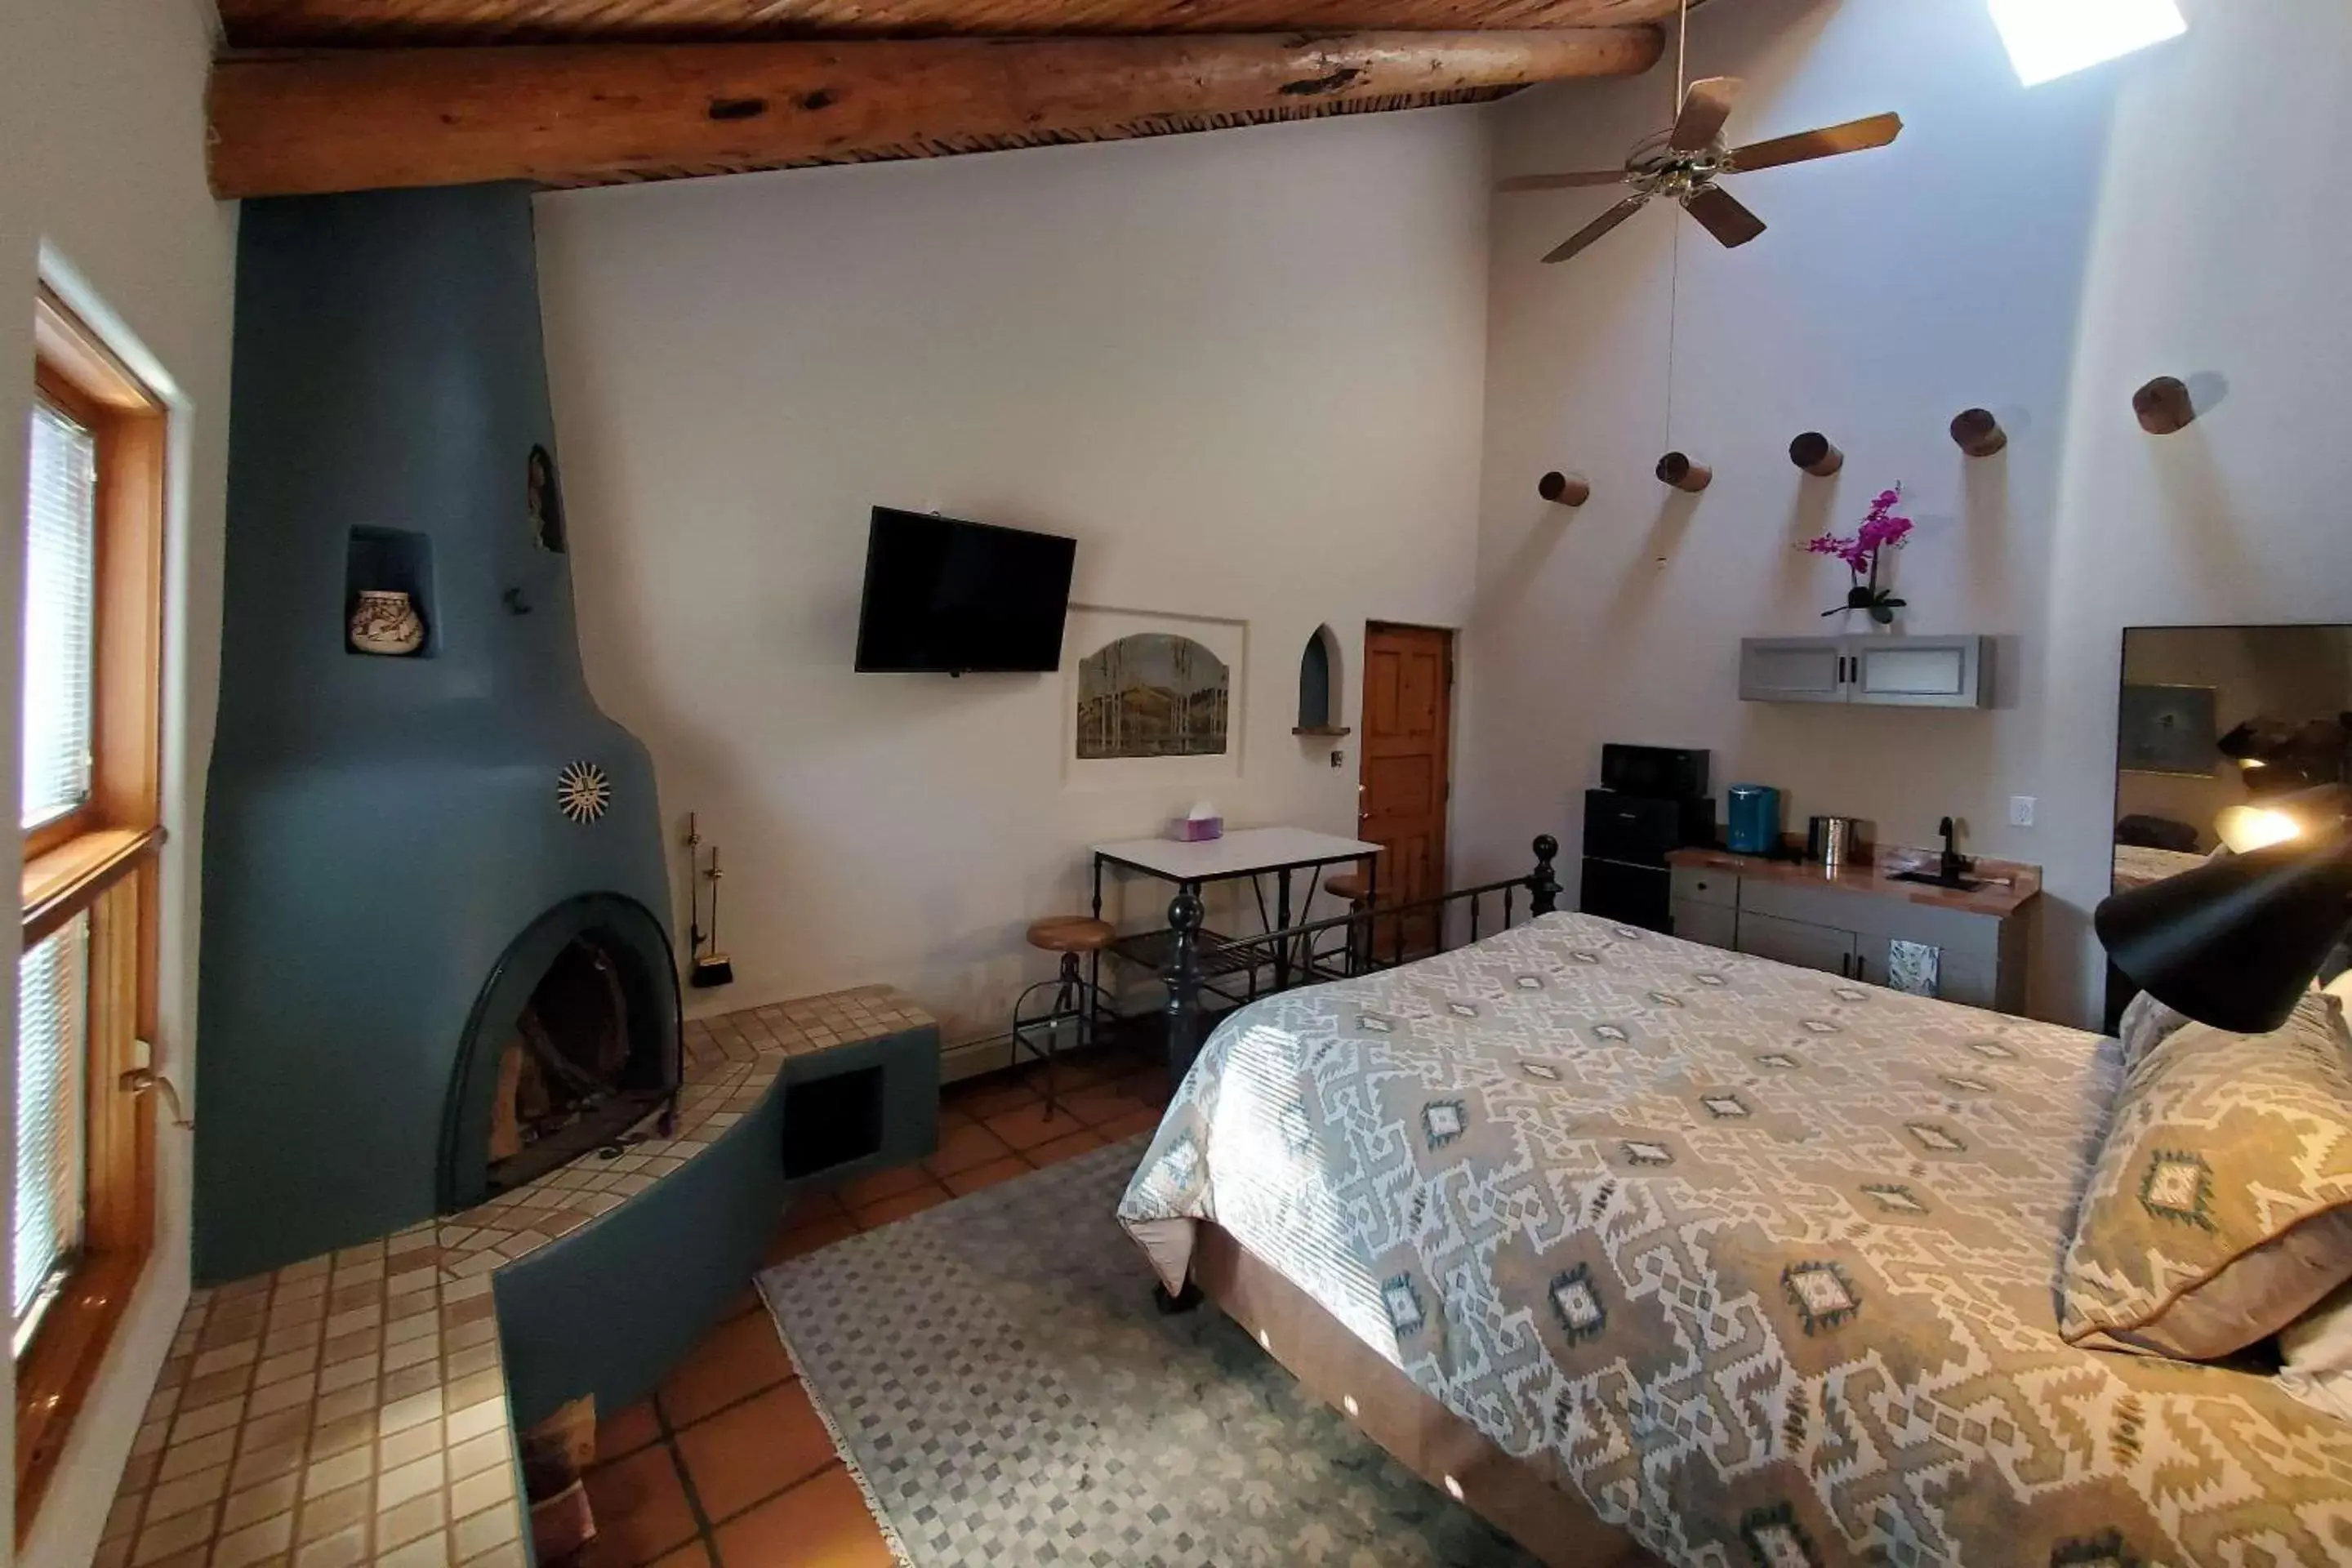 Bedroom, Bed in Casas de Suenos Old Town Historic Inn, Ascend Hotel Collection